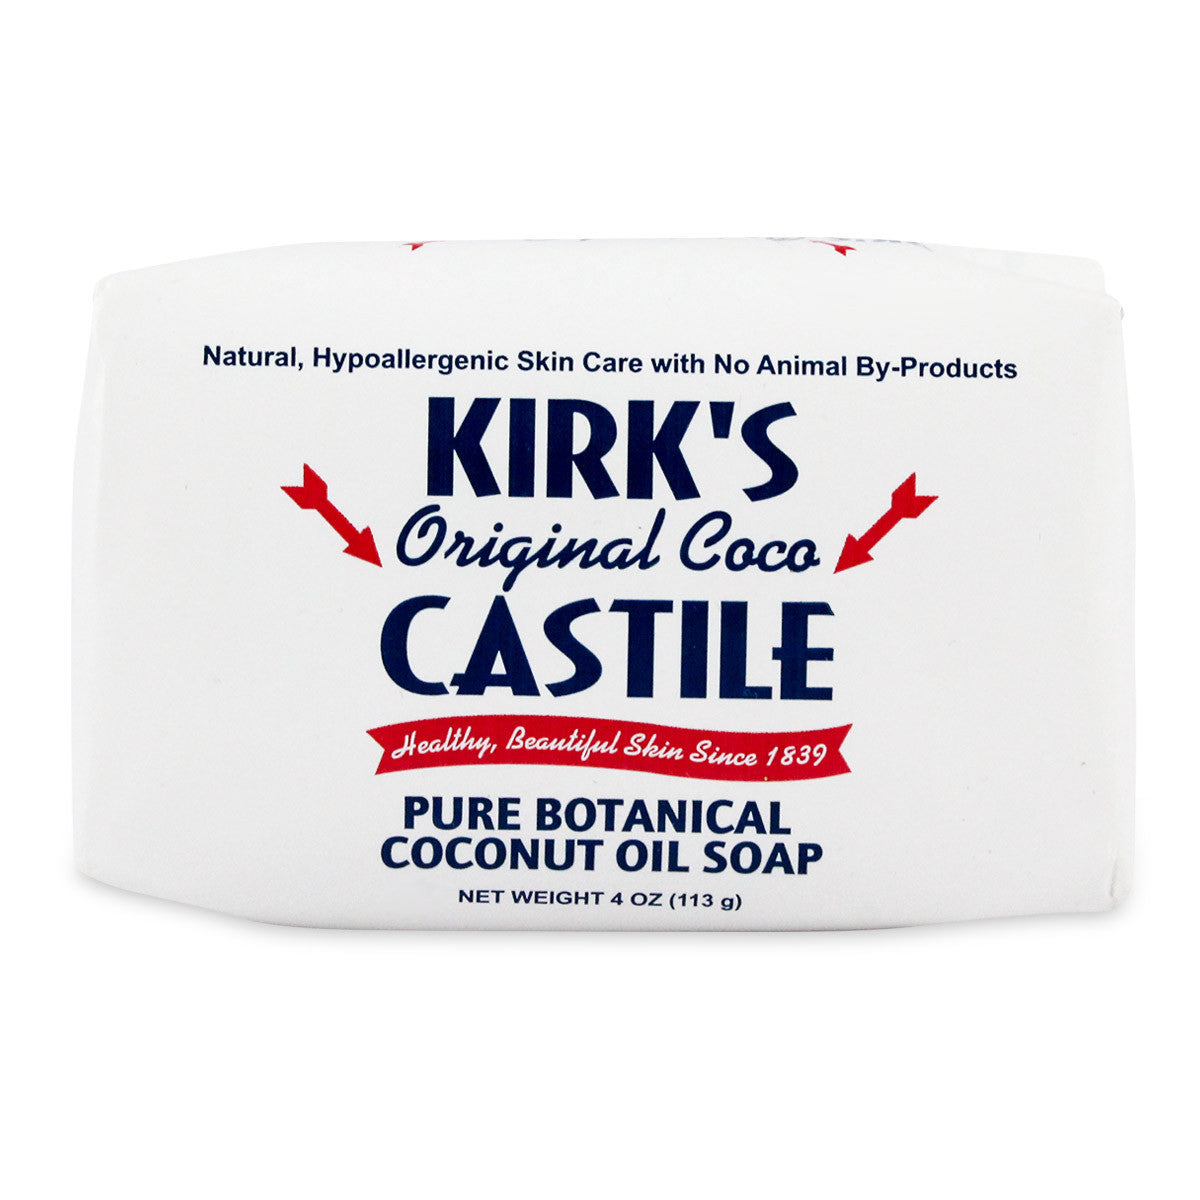 Primary image of Original Coco Castile Soap